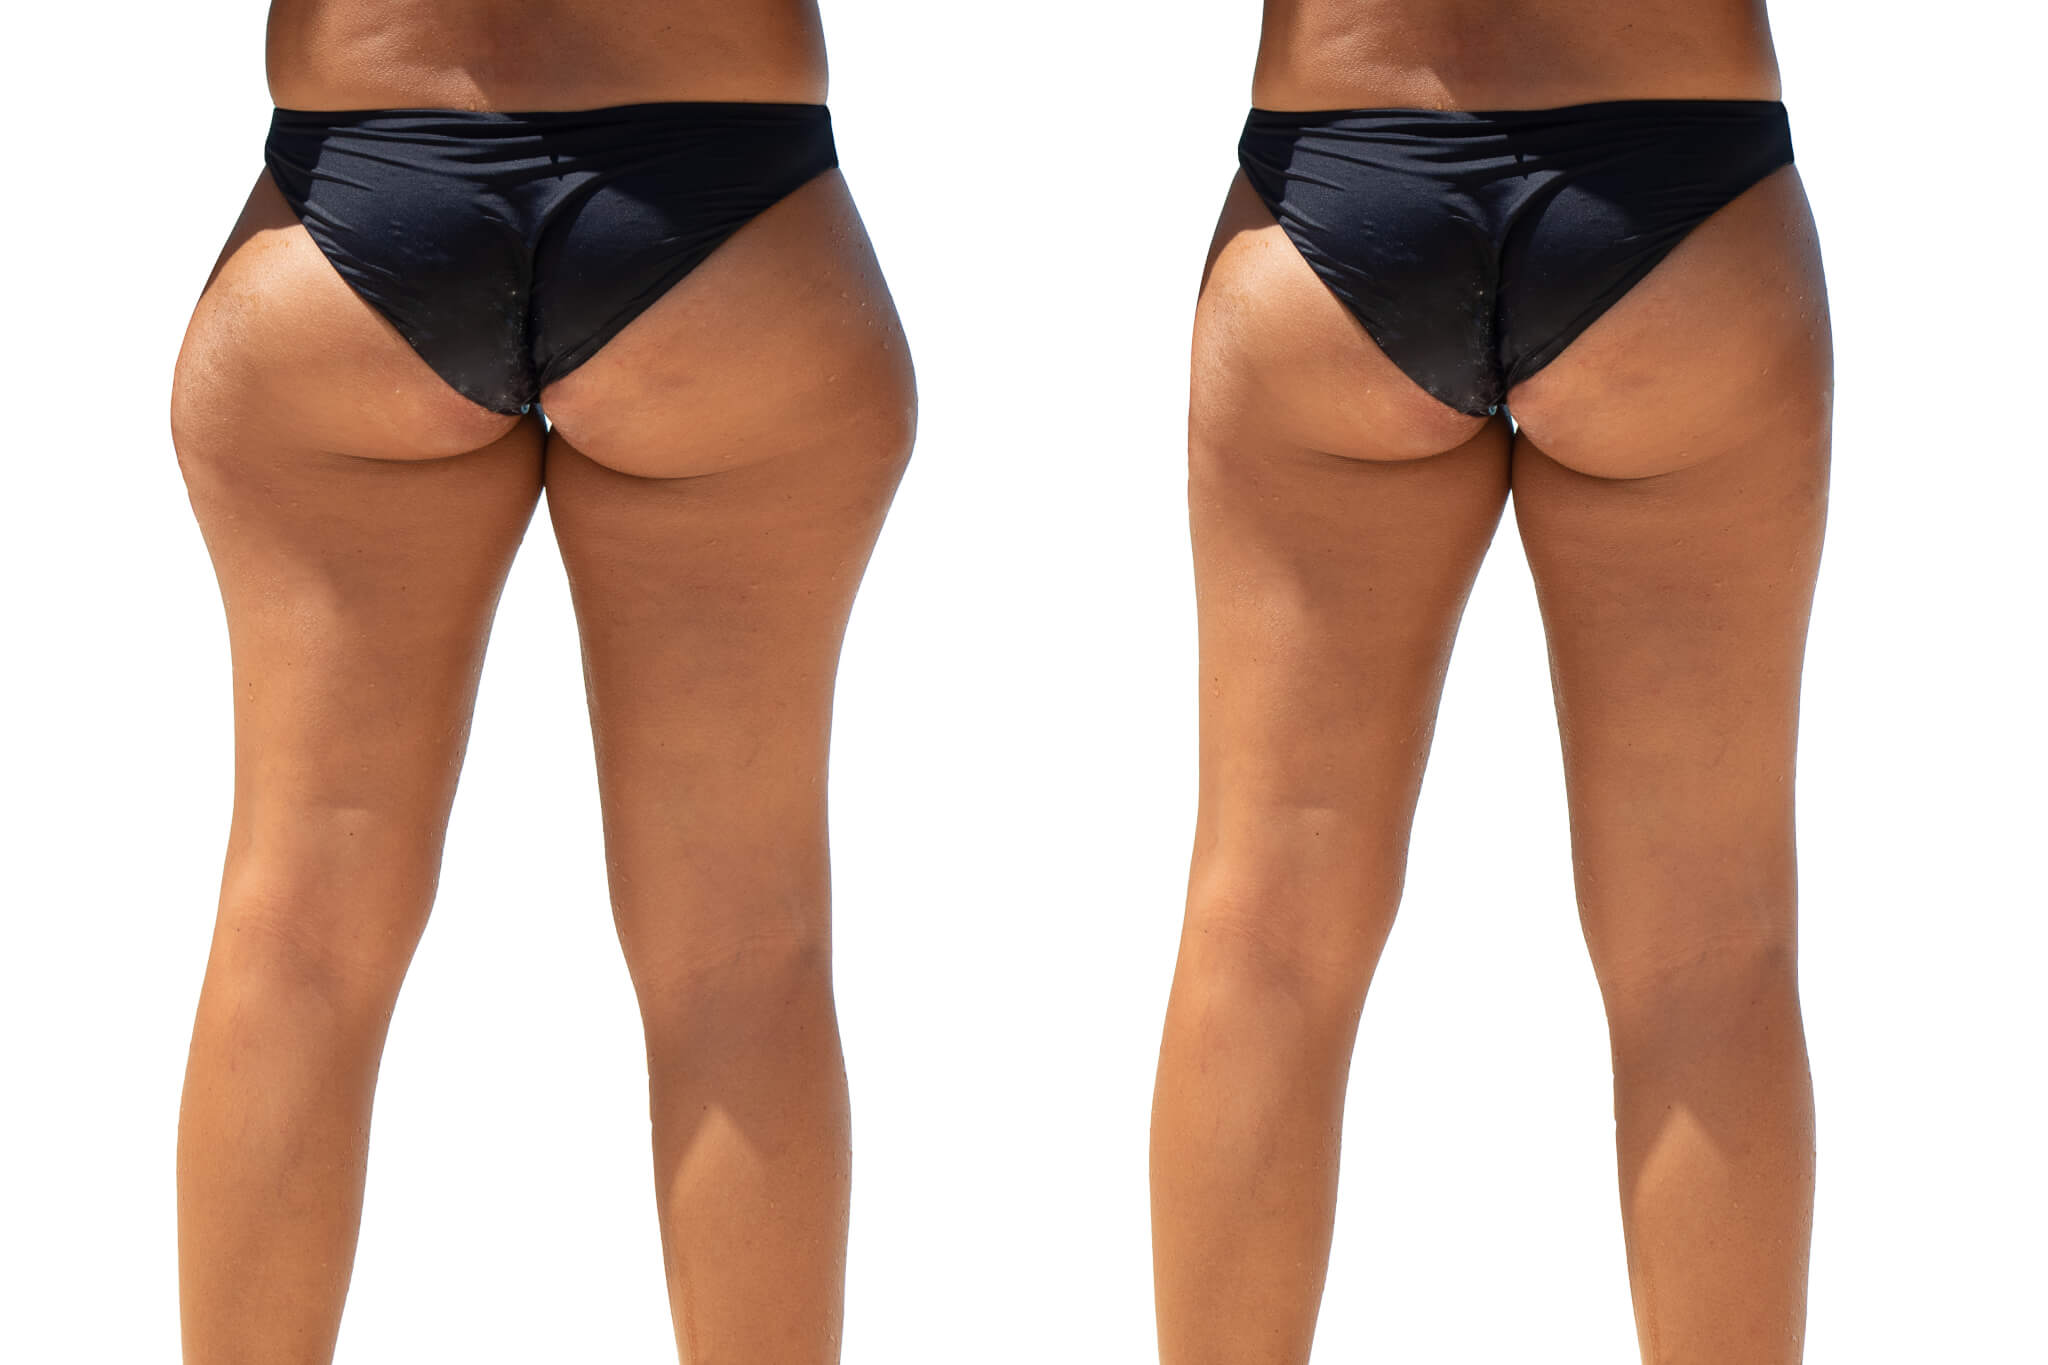 The Brazilian Butt Lift: Getting a Buttocks Augmentation ...